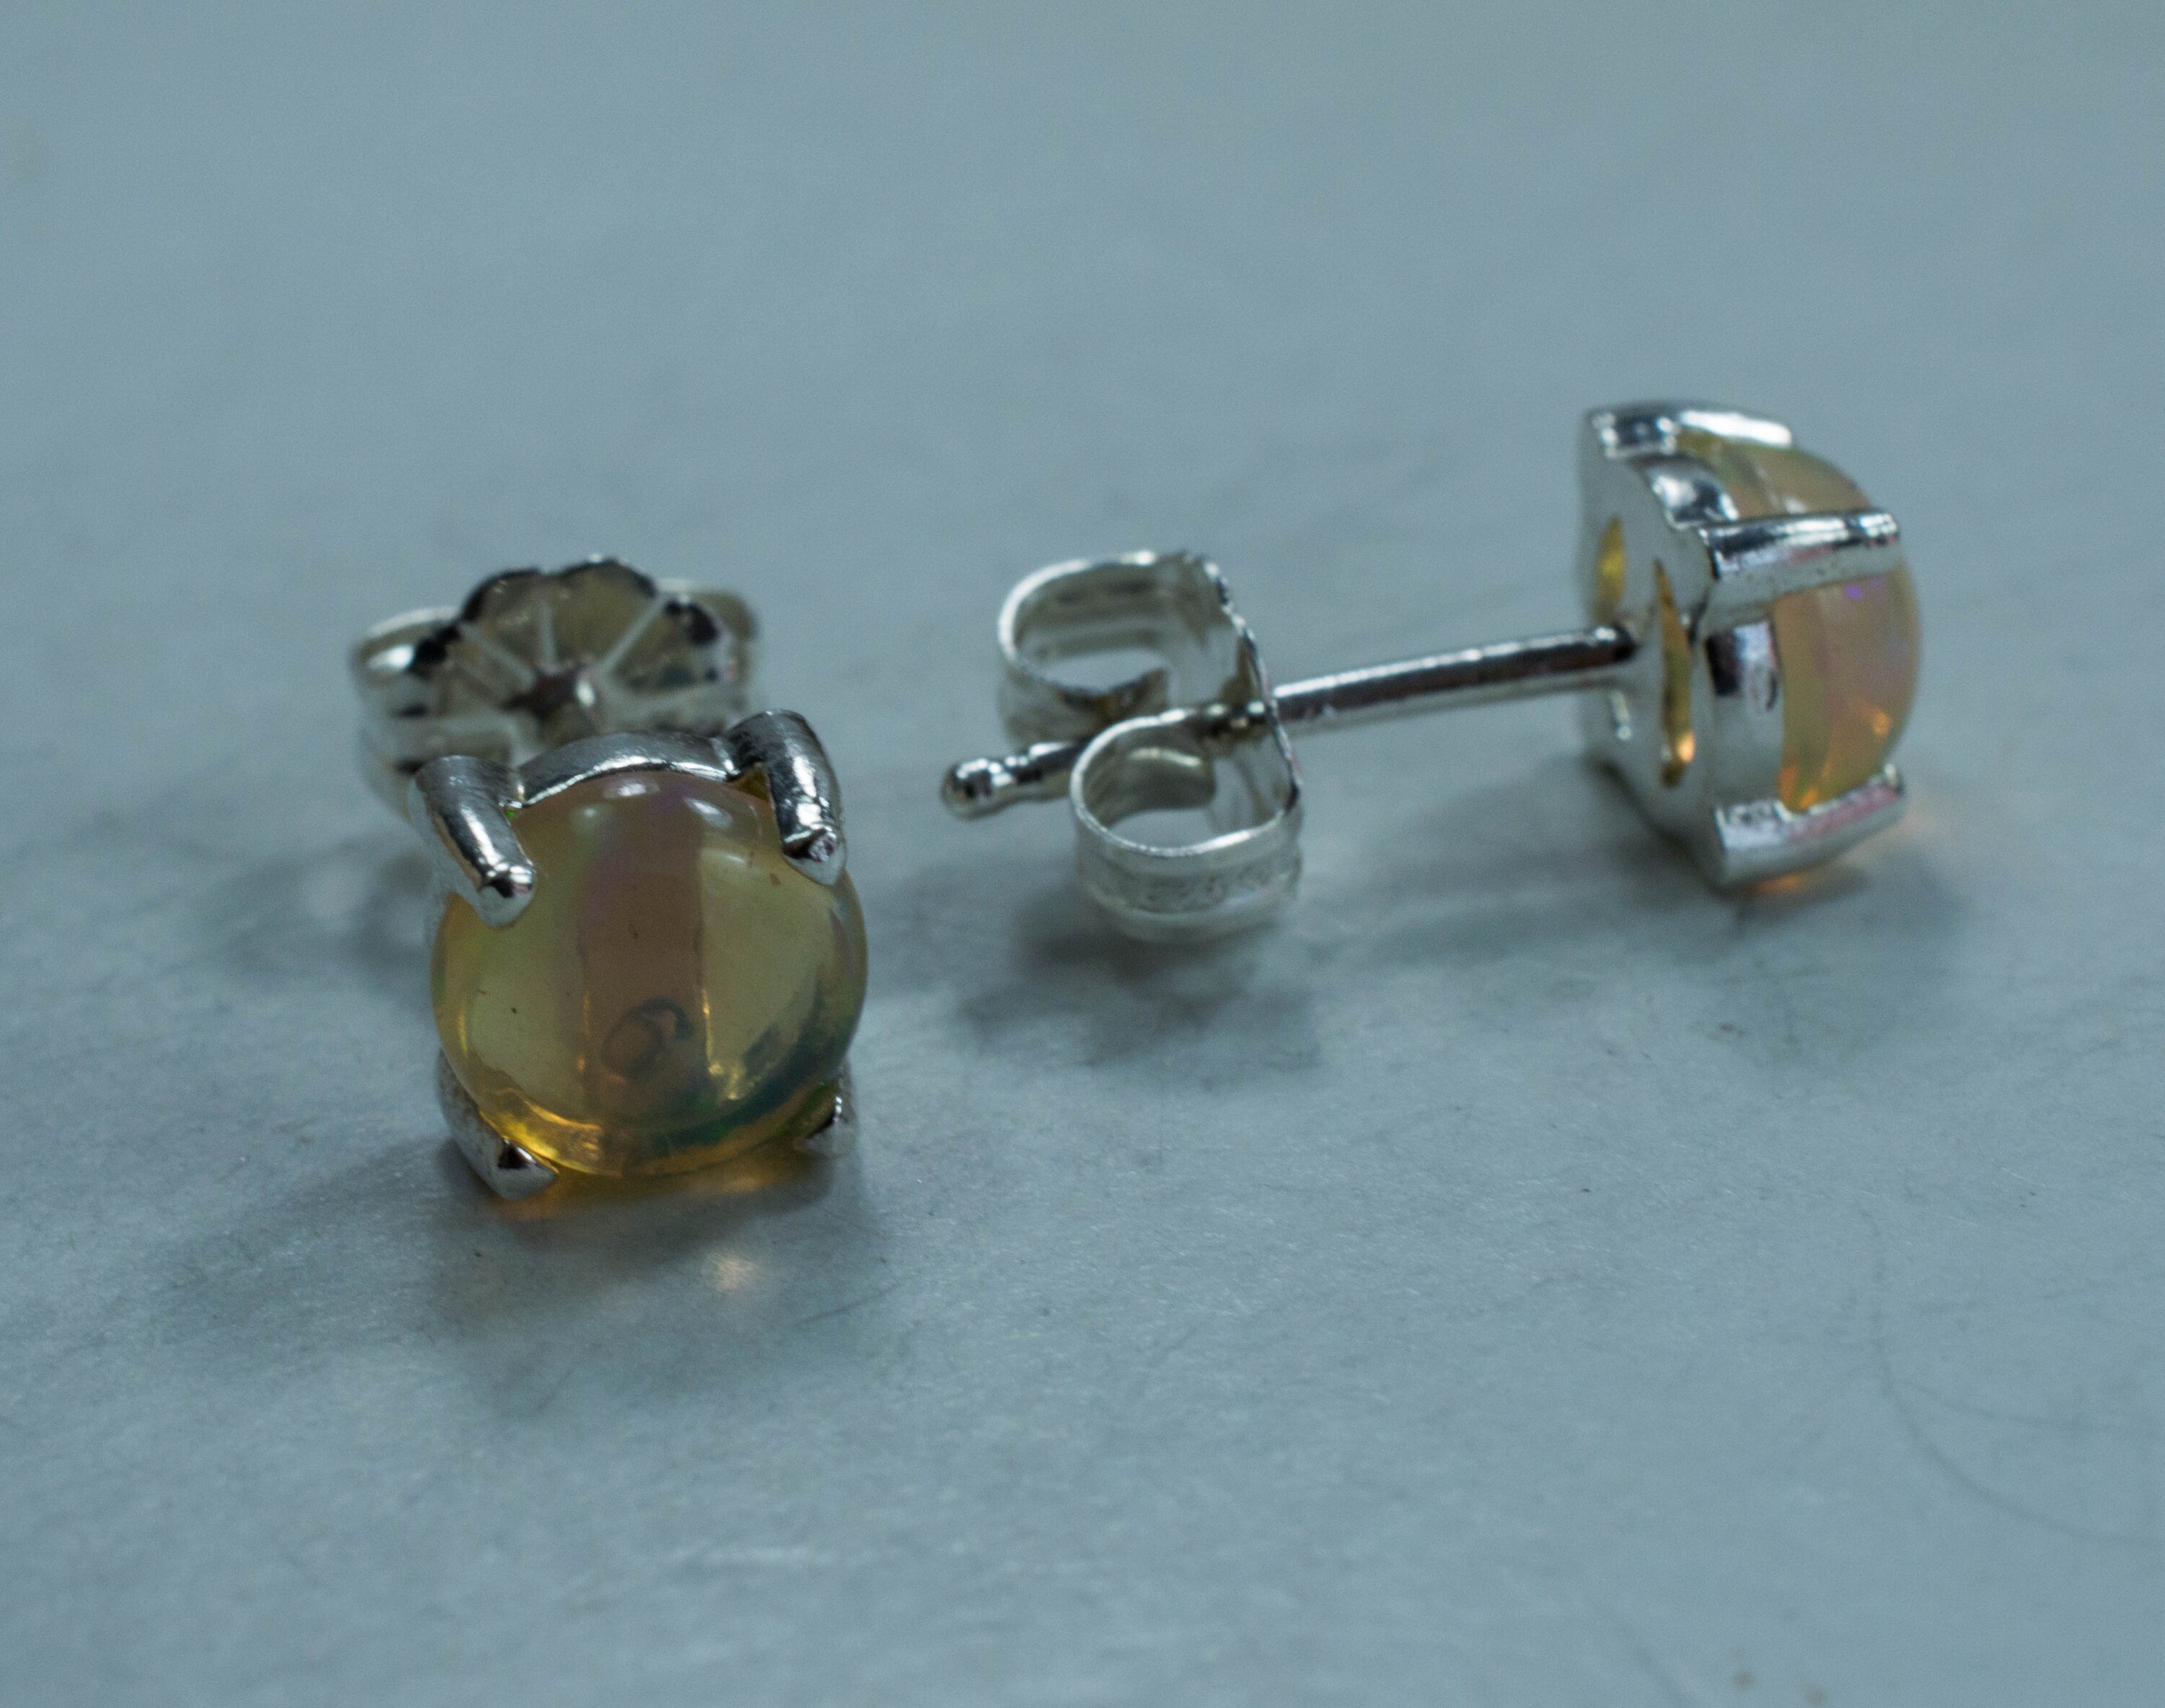 Opal Earrings; Genuine Untreated Ethiopian Opals - Mark Oliver Gems